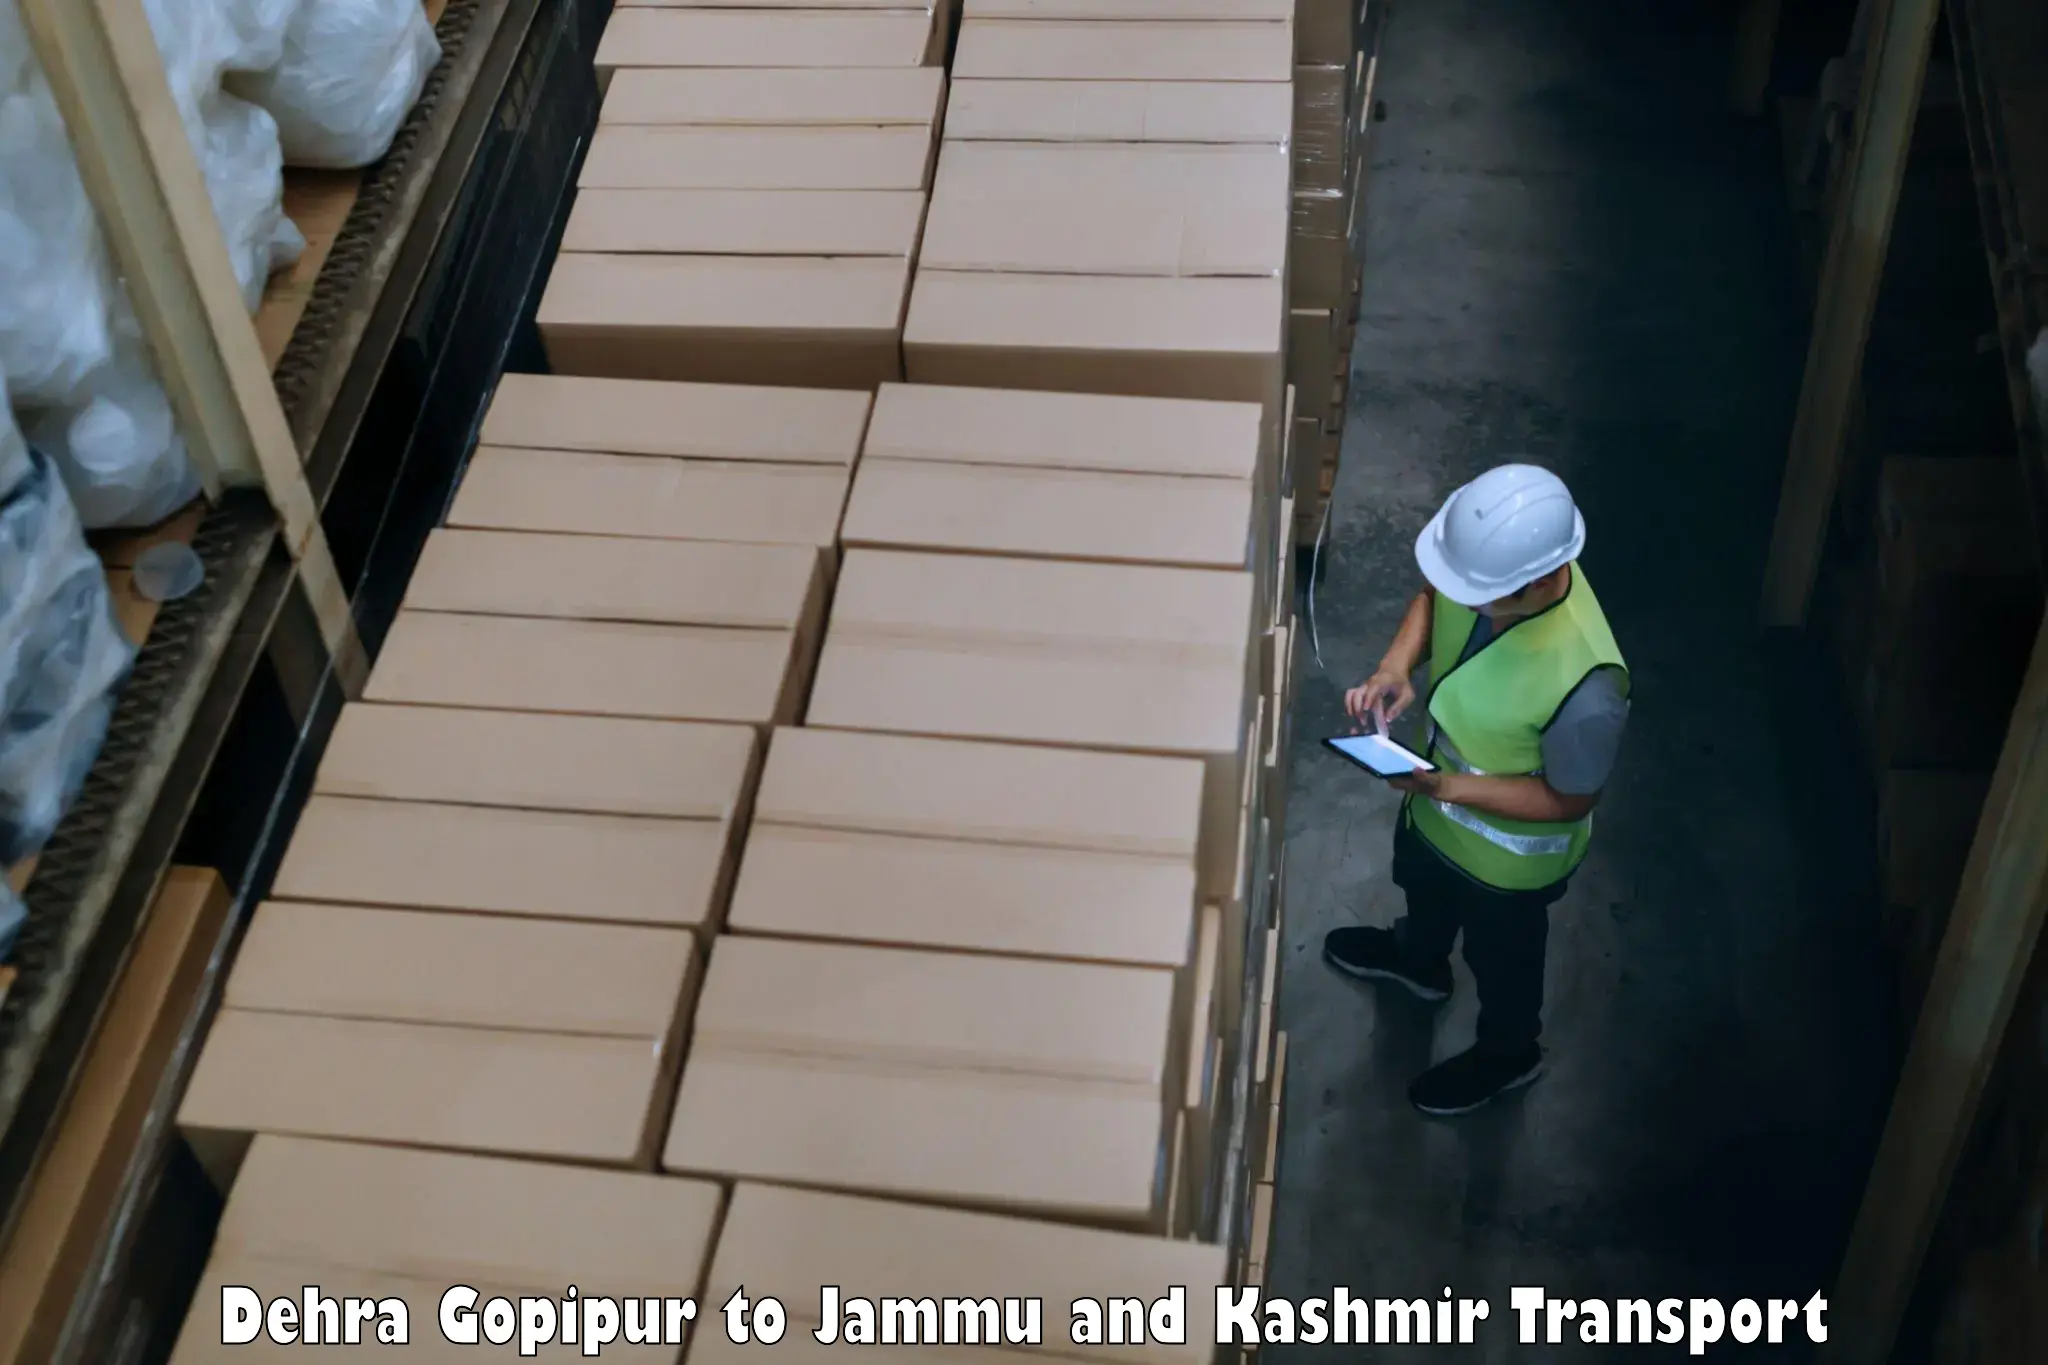 Truck transport companies in India Dehra Gopipur to Udhampur